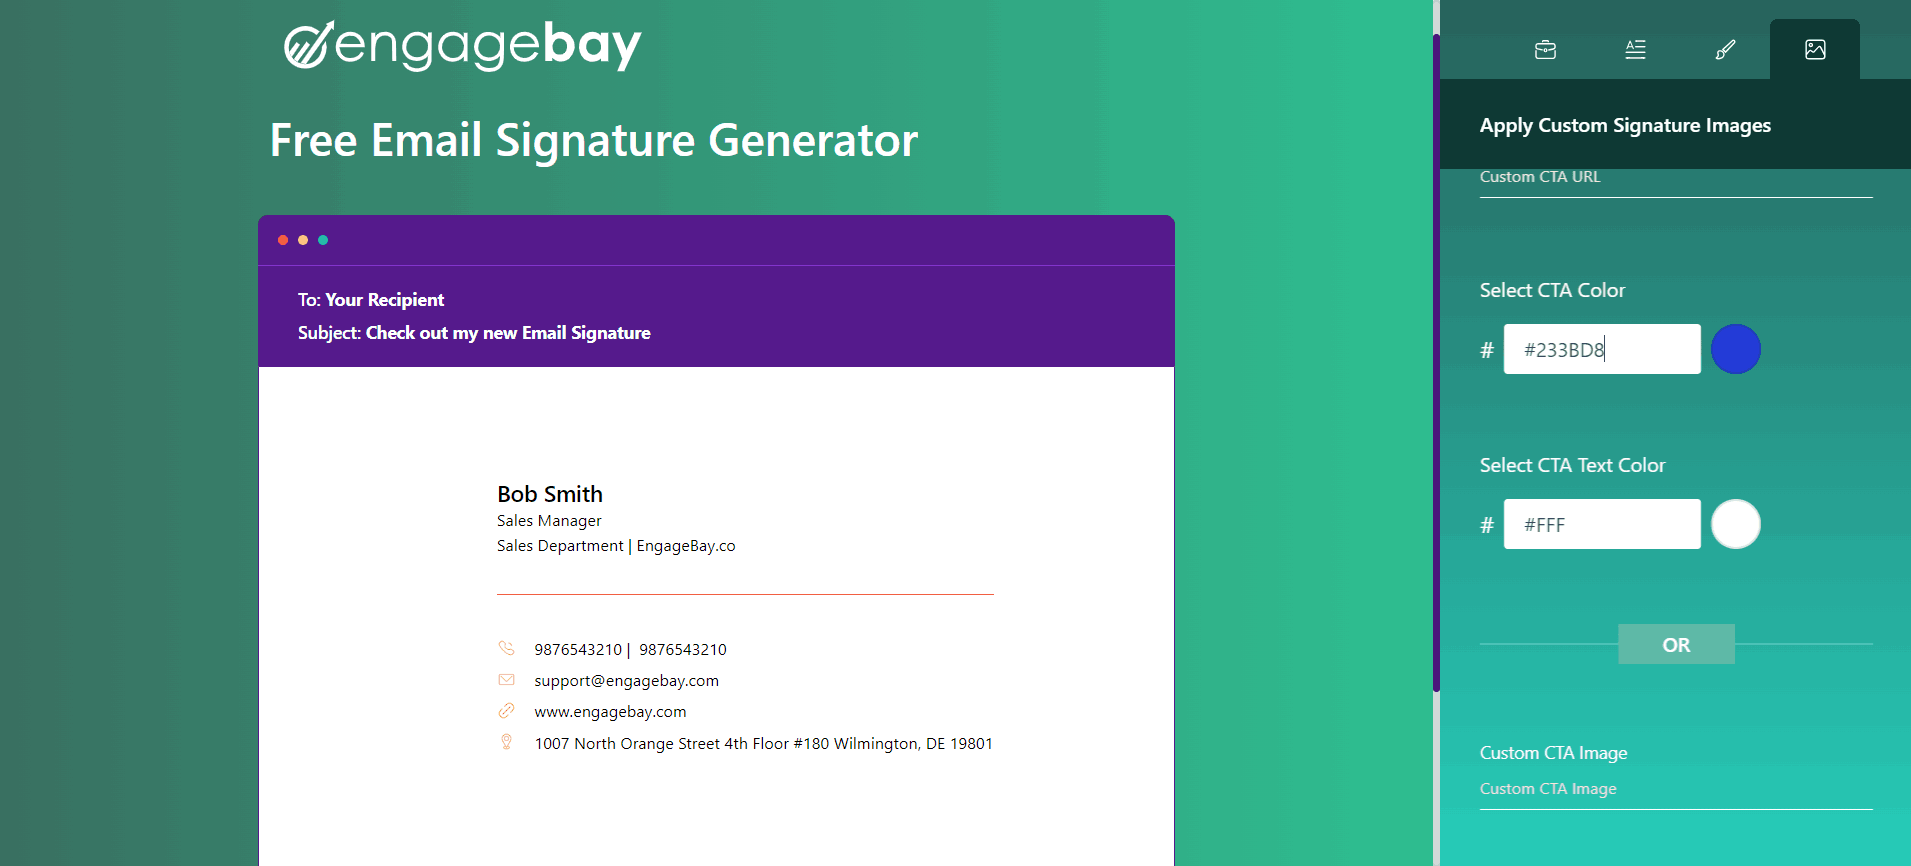 Engagebay's free Email Signature Generator